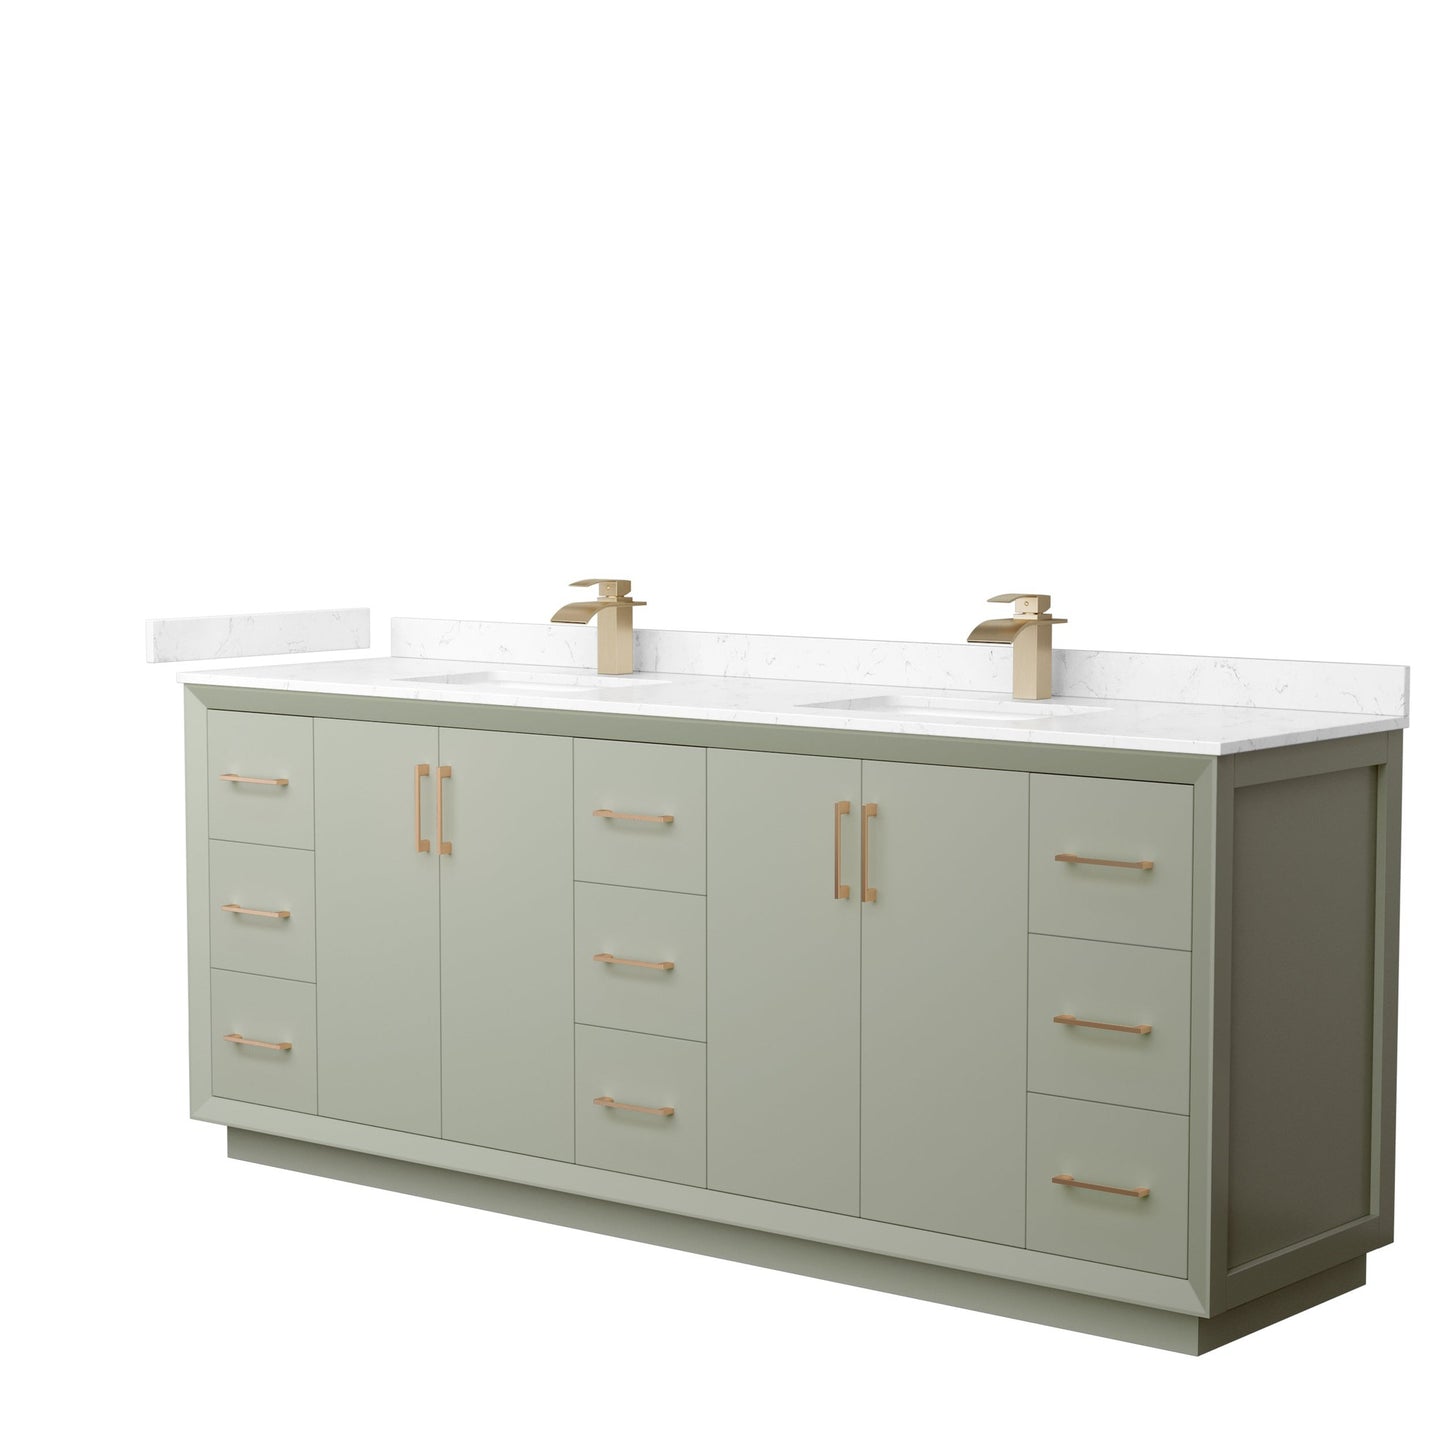 Wyndham Collection Strada 84" Double Bathroom Vanity in Light Green, Carrara Cultured Marble Countertop, Undermount Square Sinks, Satin Bronze Trim